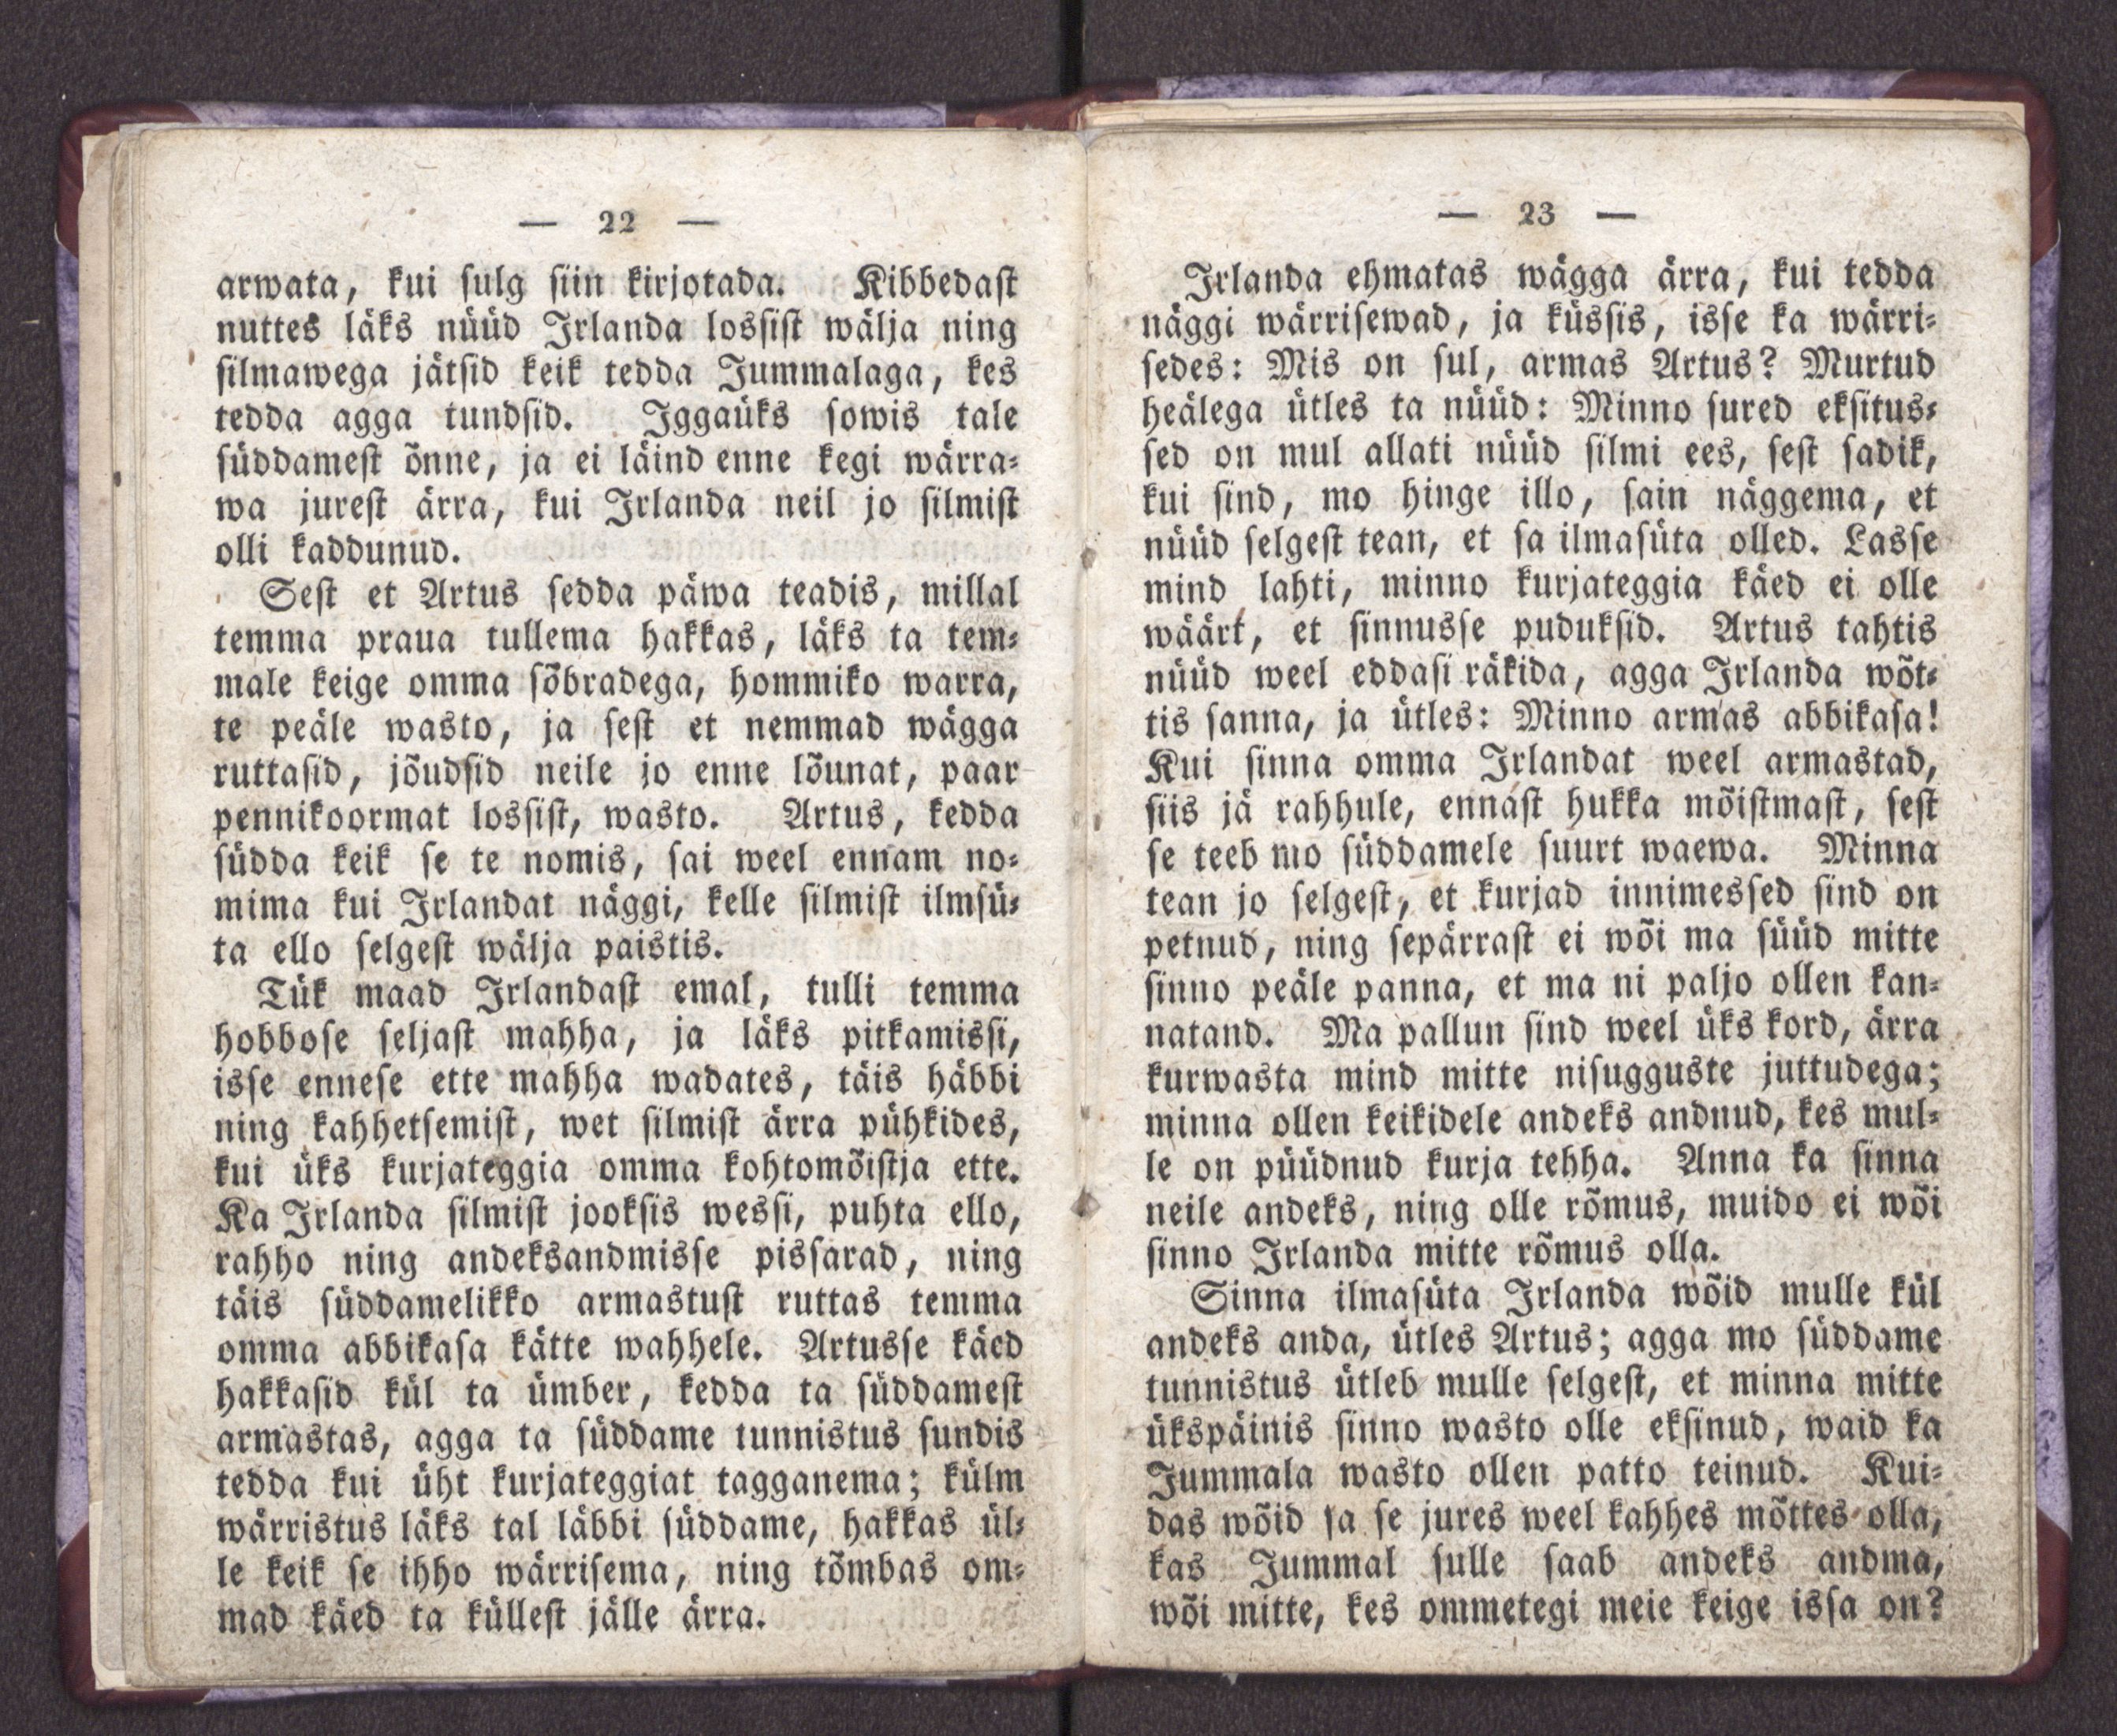 Irlanda, ehk puhta ello wõit (1844) | 12. (22-23) Main body of text